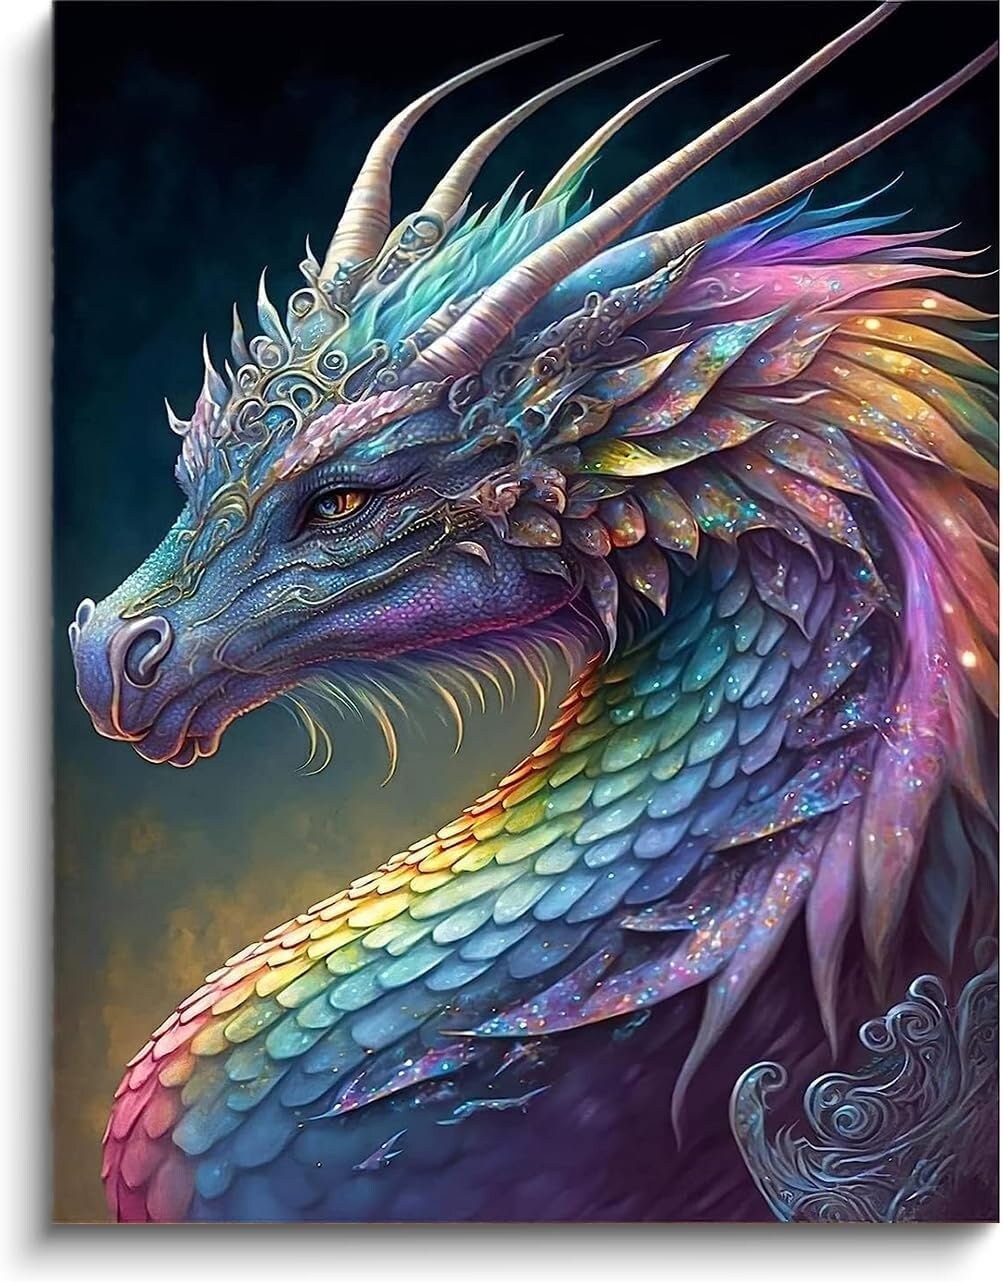 Portrait Poster - Dragon Art Poster 40 - Feng Shui Ancient Dragon